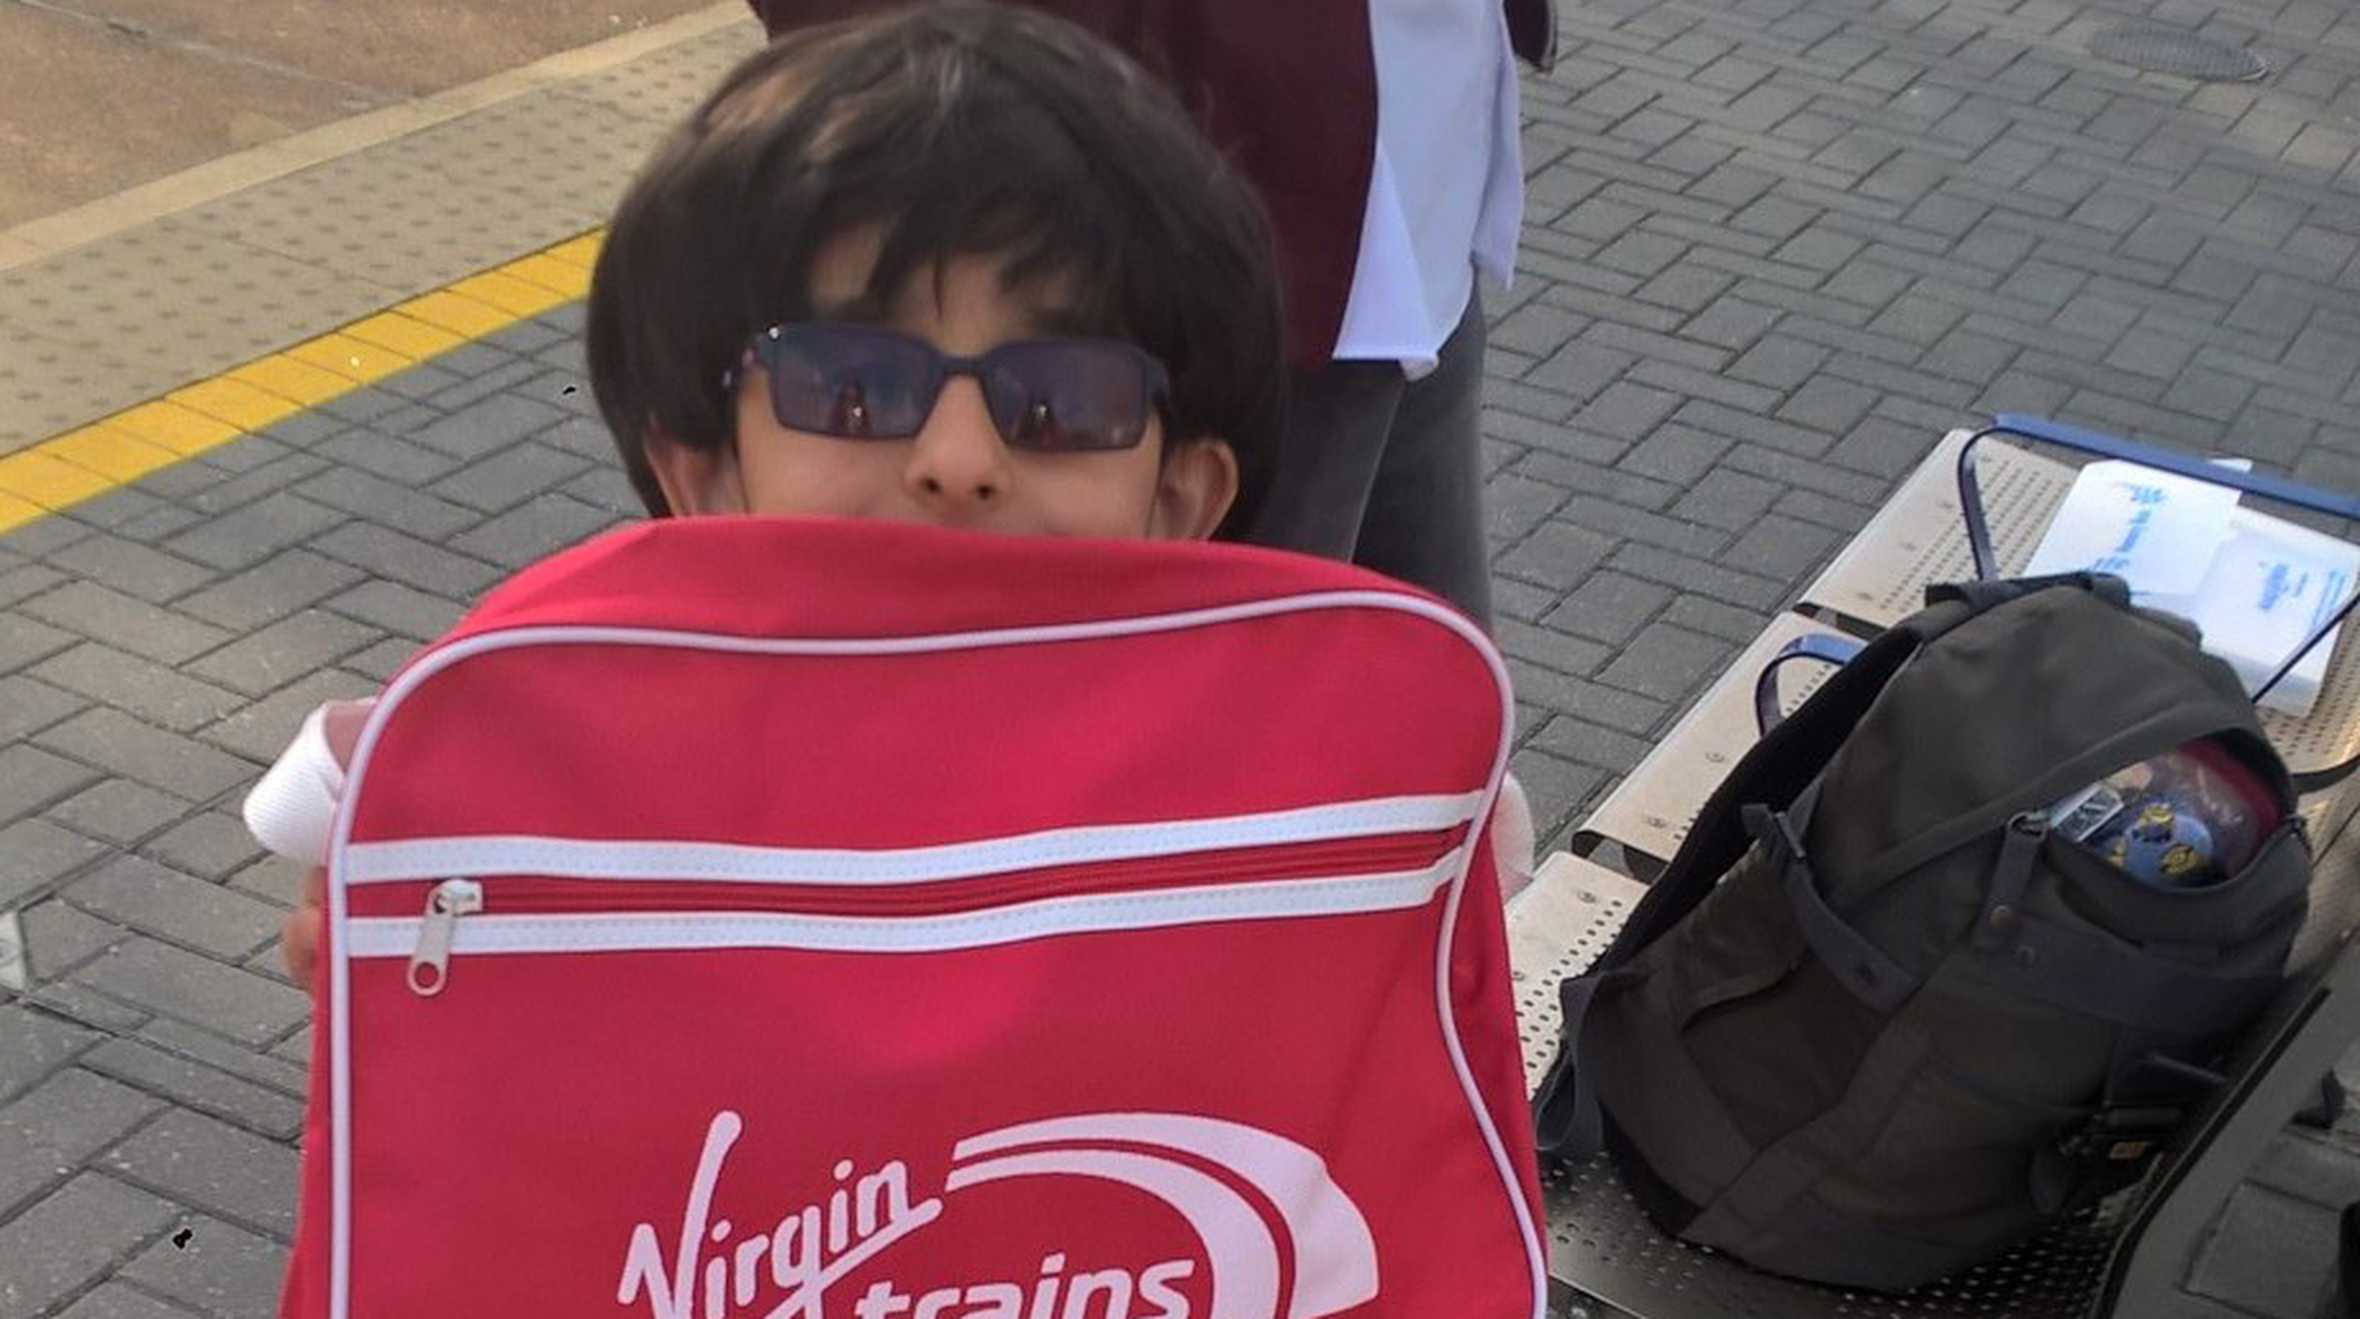 Arjun with his Virgin trains bag